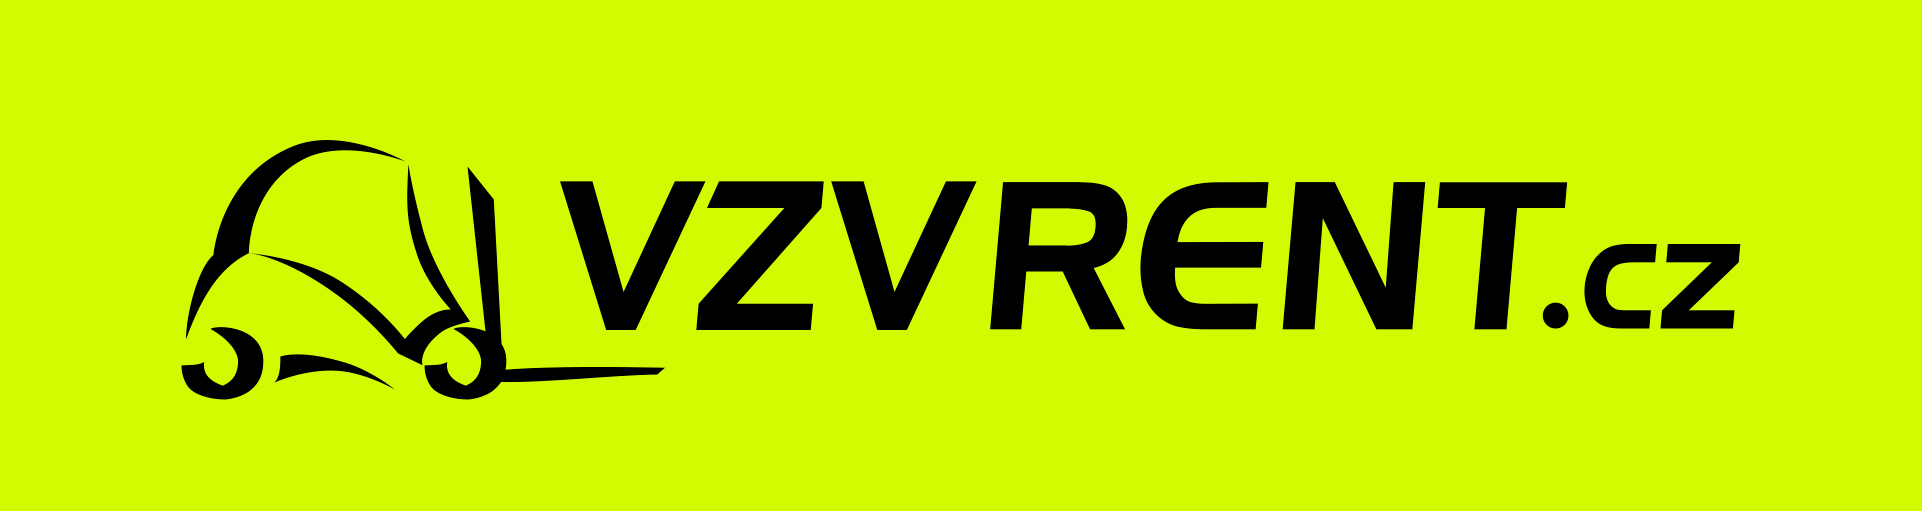 VZVRENT.cz